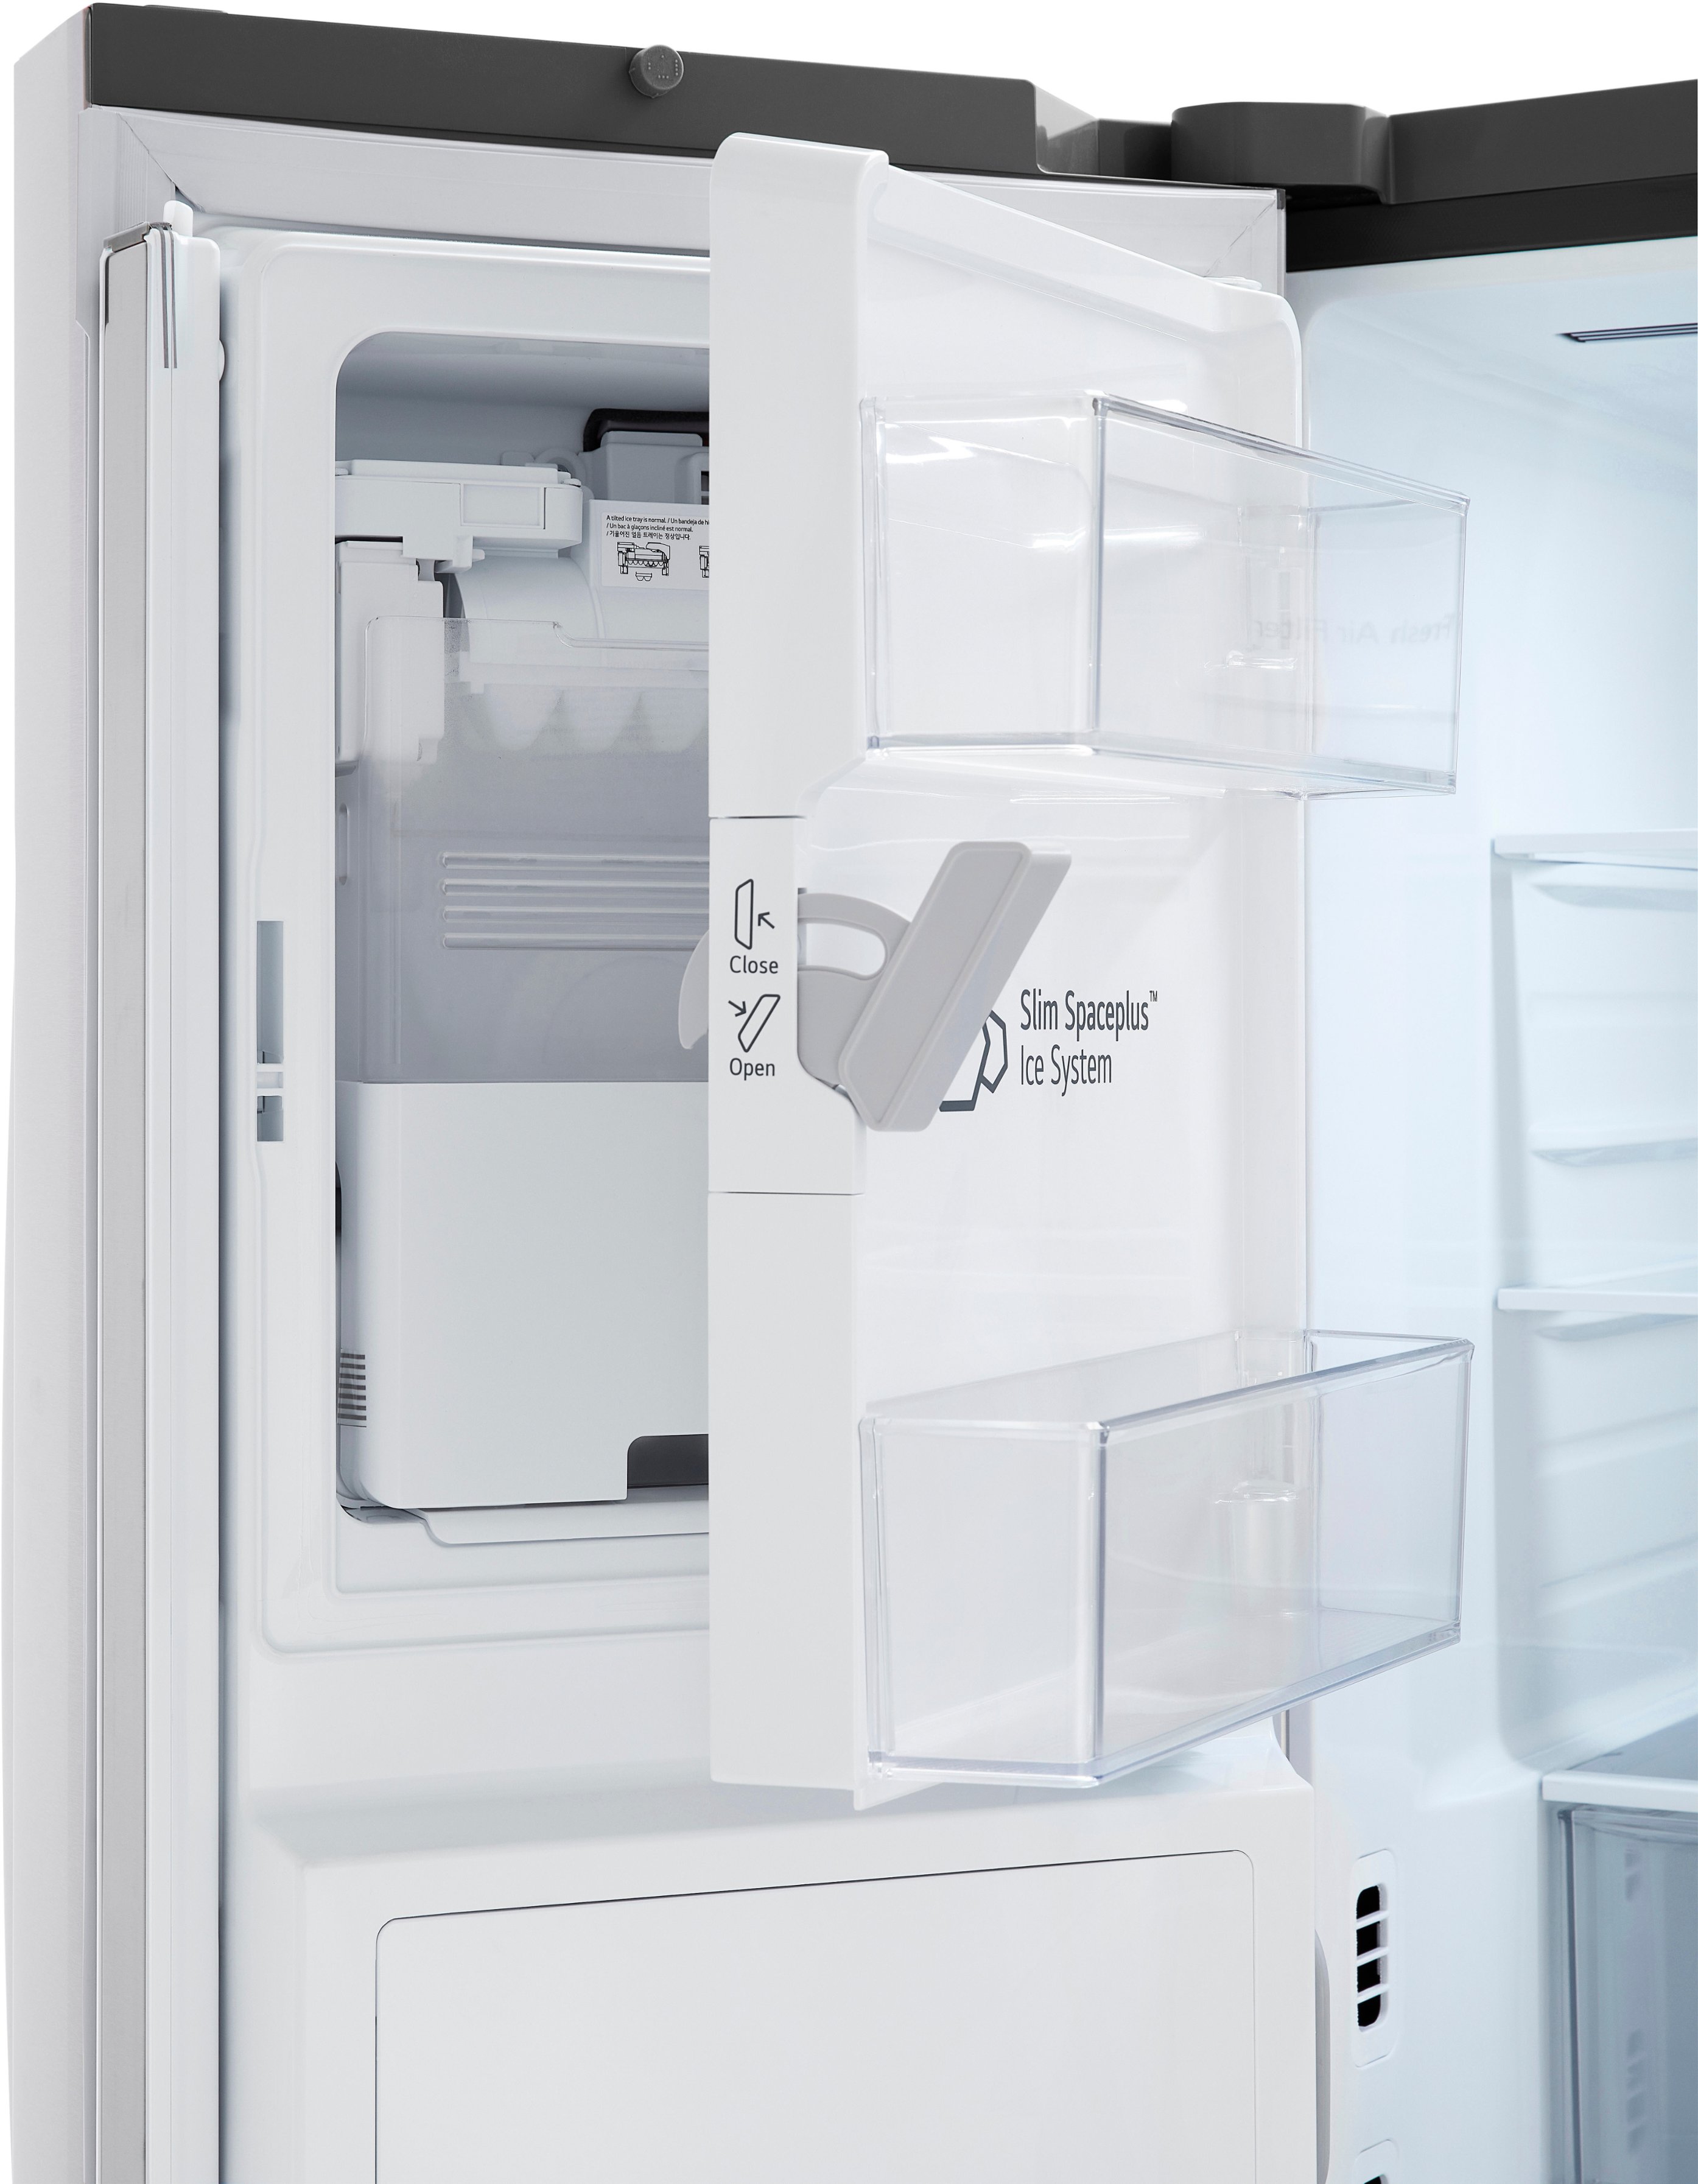 Game Room Refrigerators - Best Buy